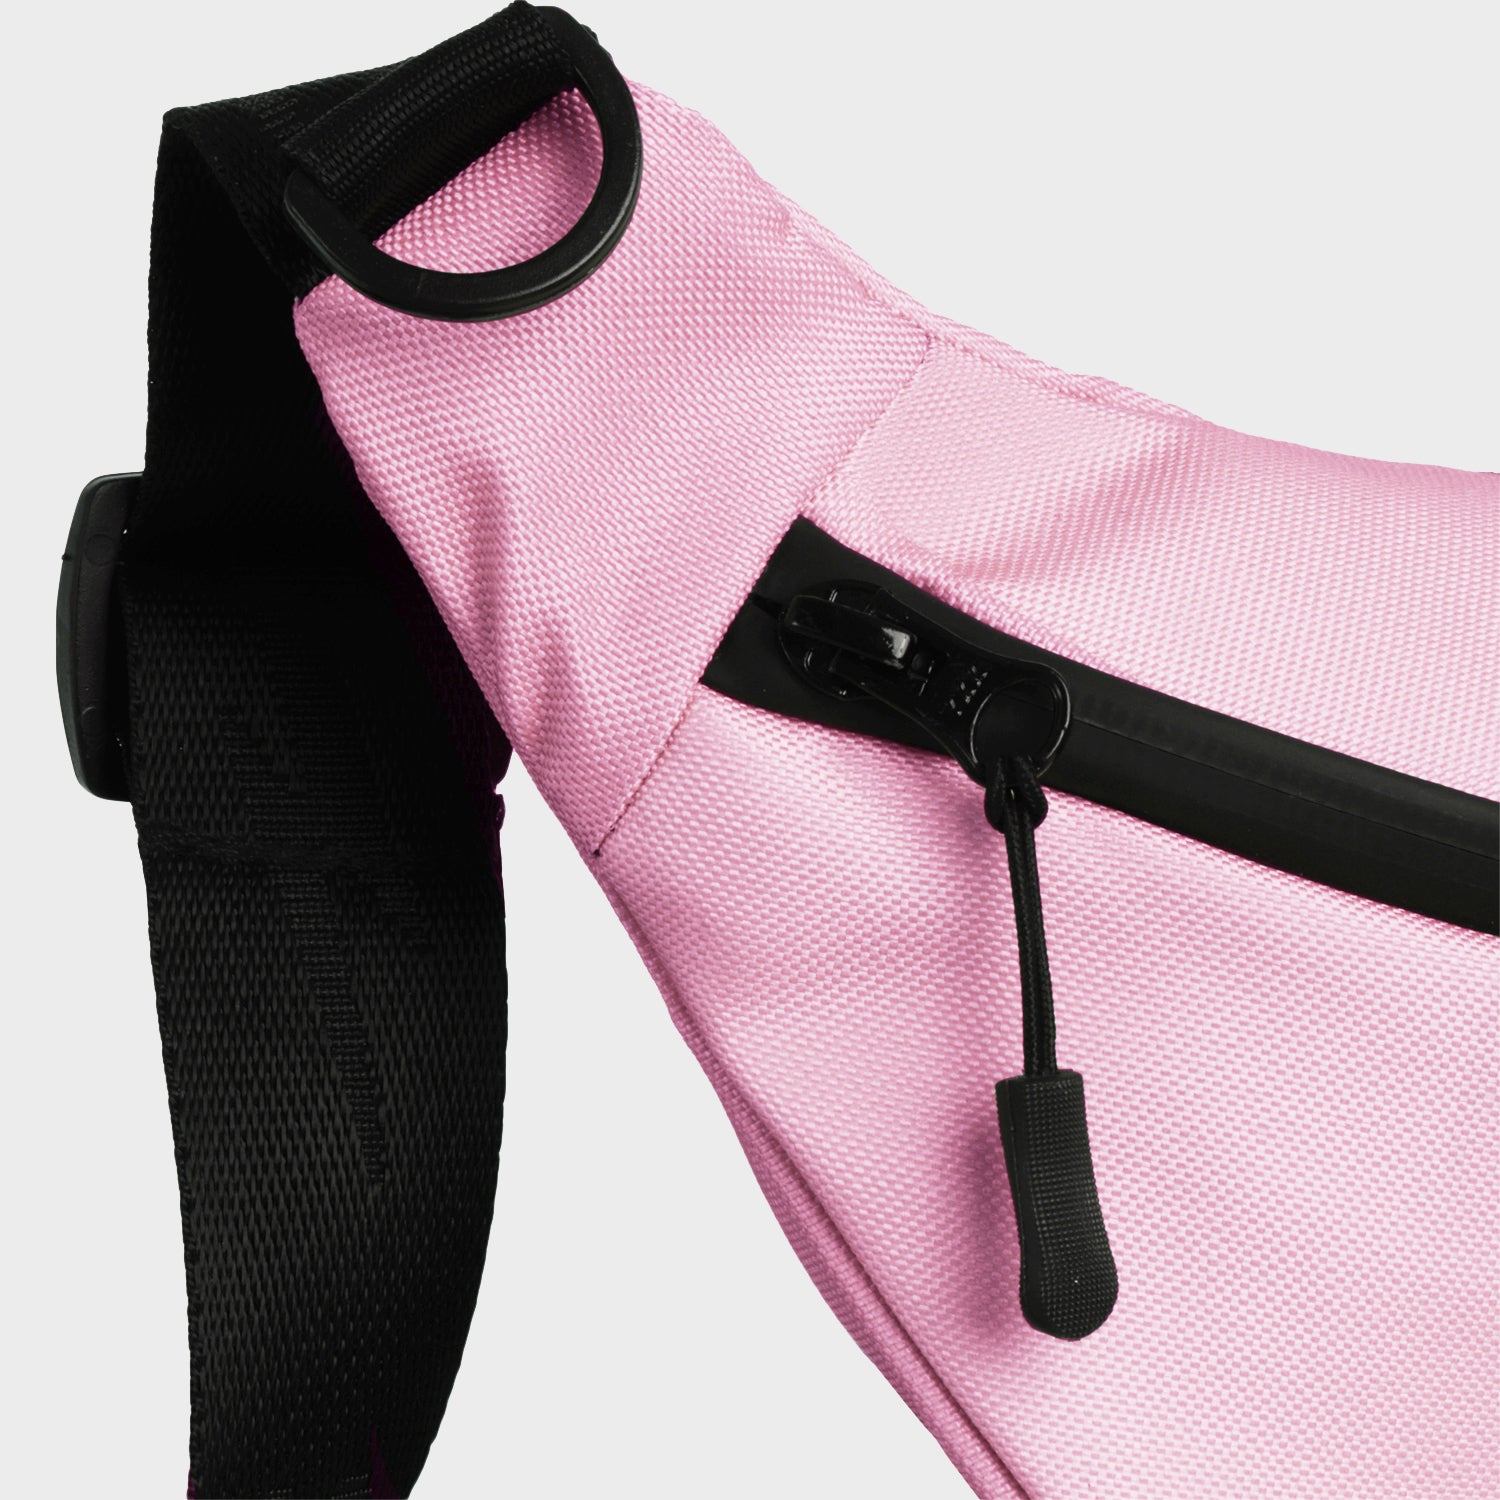 Supervek Crossbody Slinger - Candycrush Pink - Urban Functional Fanny Hip Bag for Everyday Essentials - Side